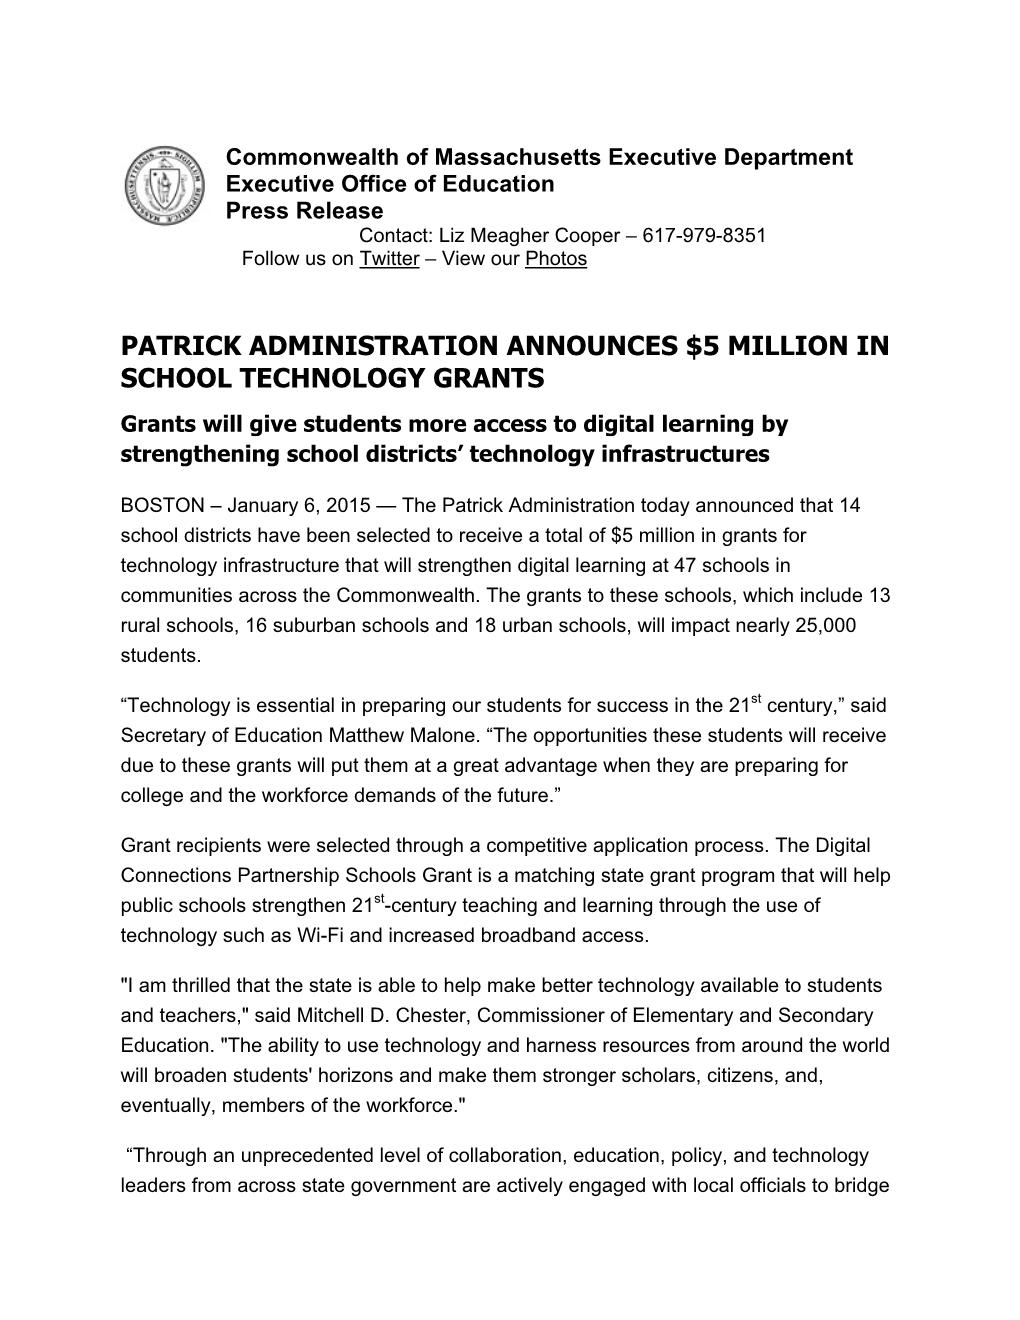 Patrick Administration Announces $5 Million In